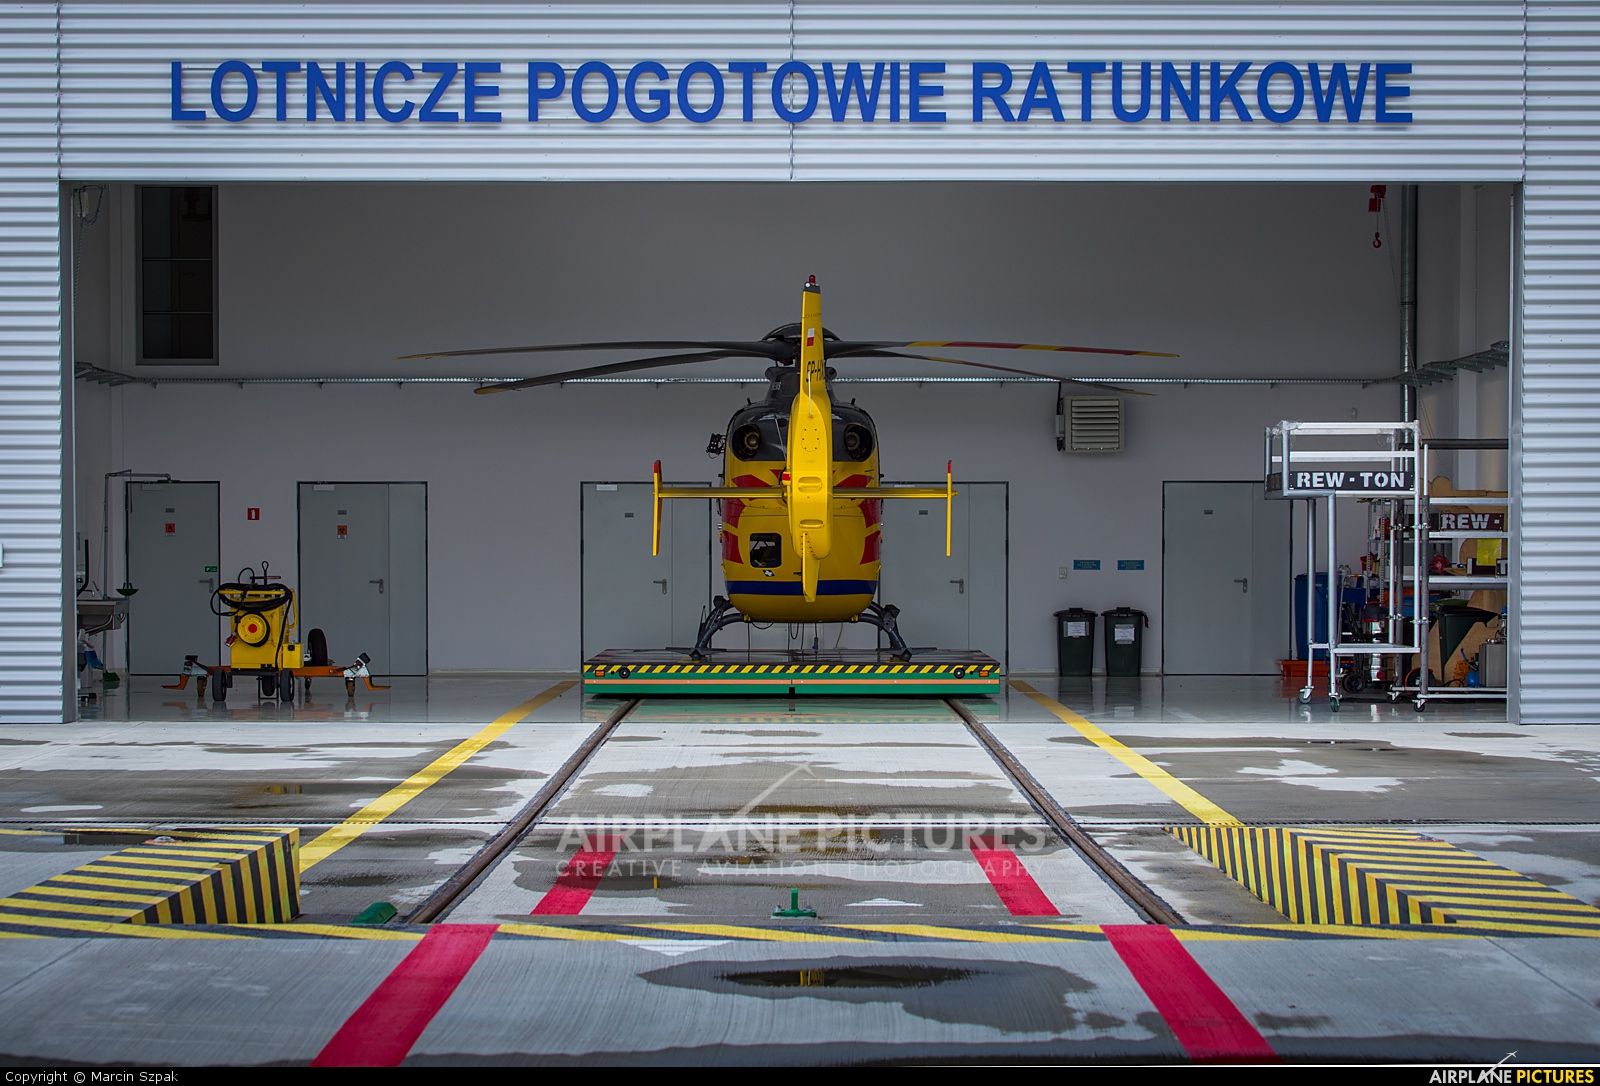 Polish Medical Air Rescue - Lotnicze Pogotowie Ratunkowe SP-HXL aircraft at Wrocław - Copernicus